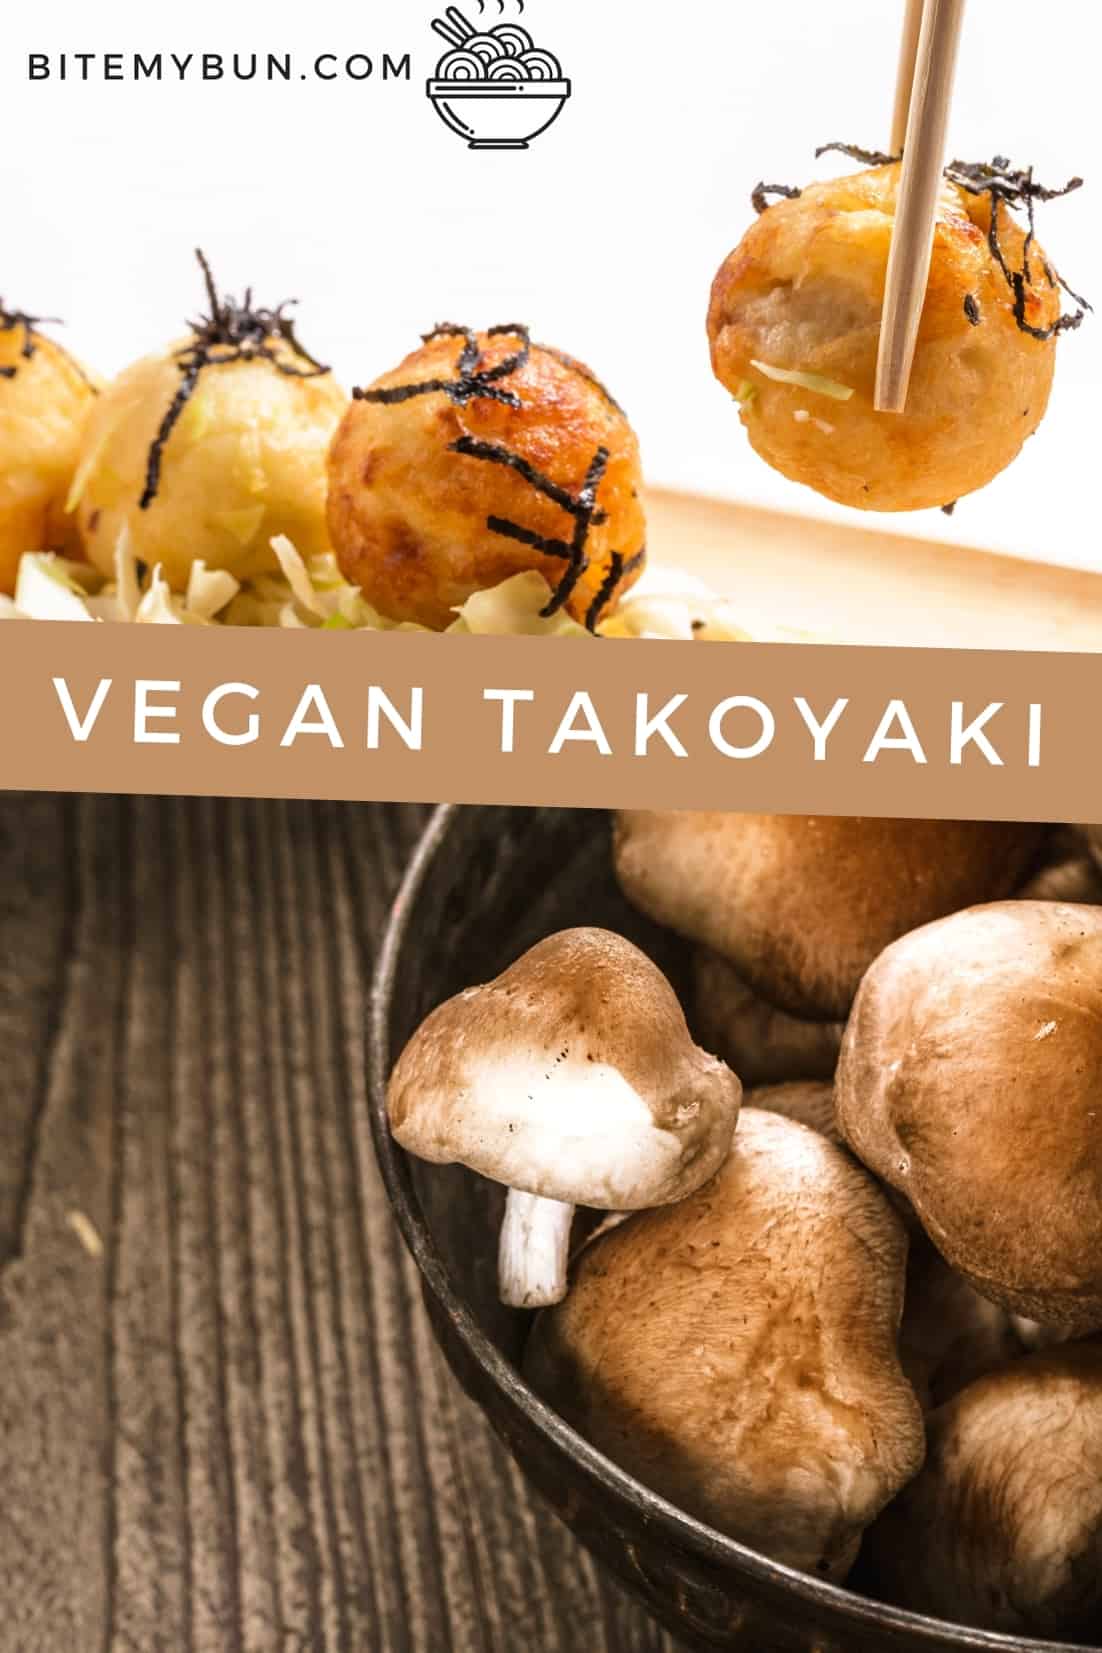 Vegan takoyaki e nang le shiitake